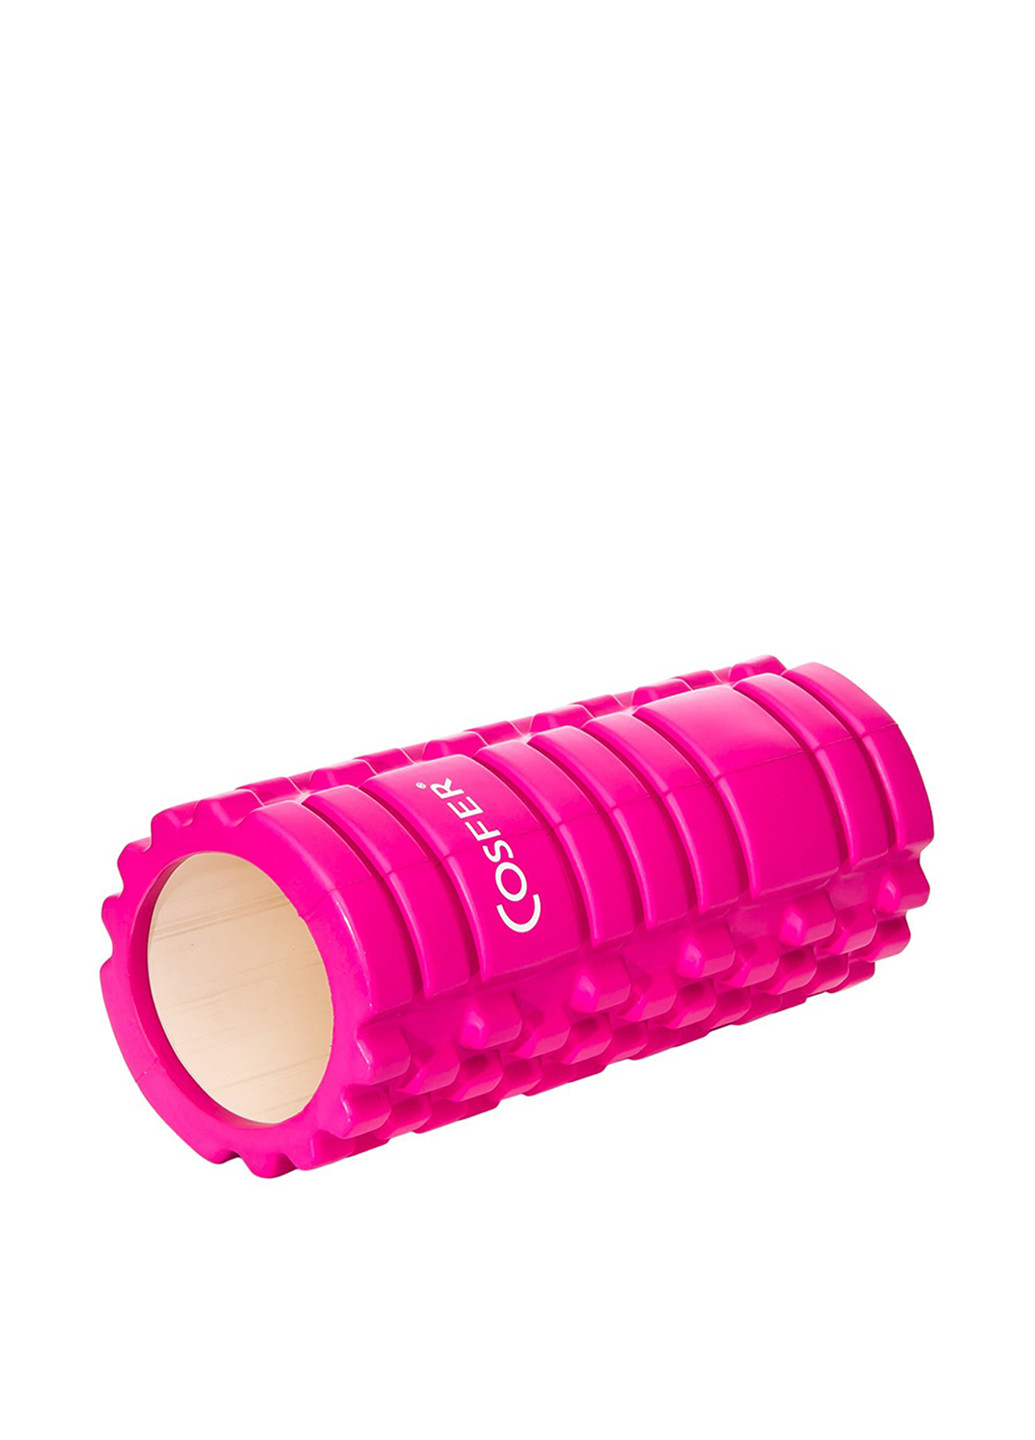 Ролик для йоги, 33х14 см Cosfer логотип рожевий